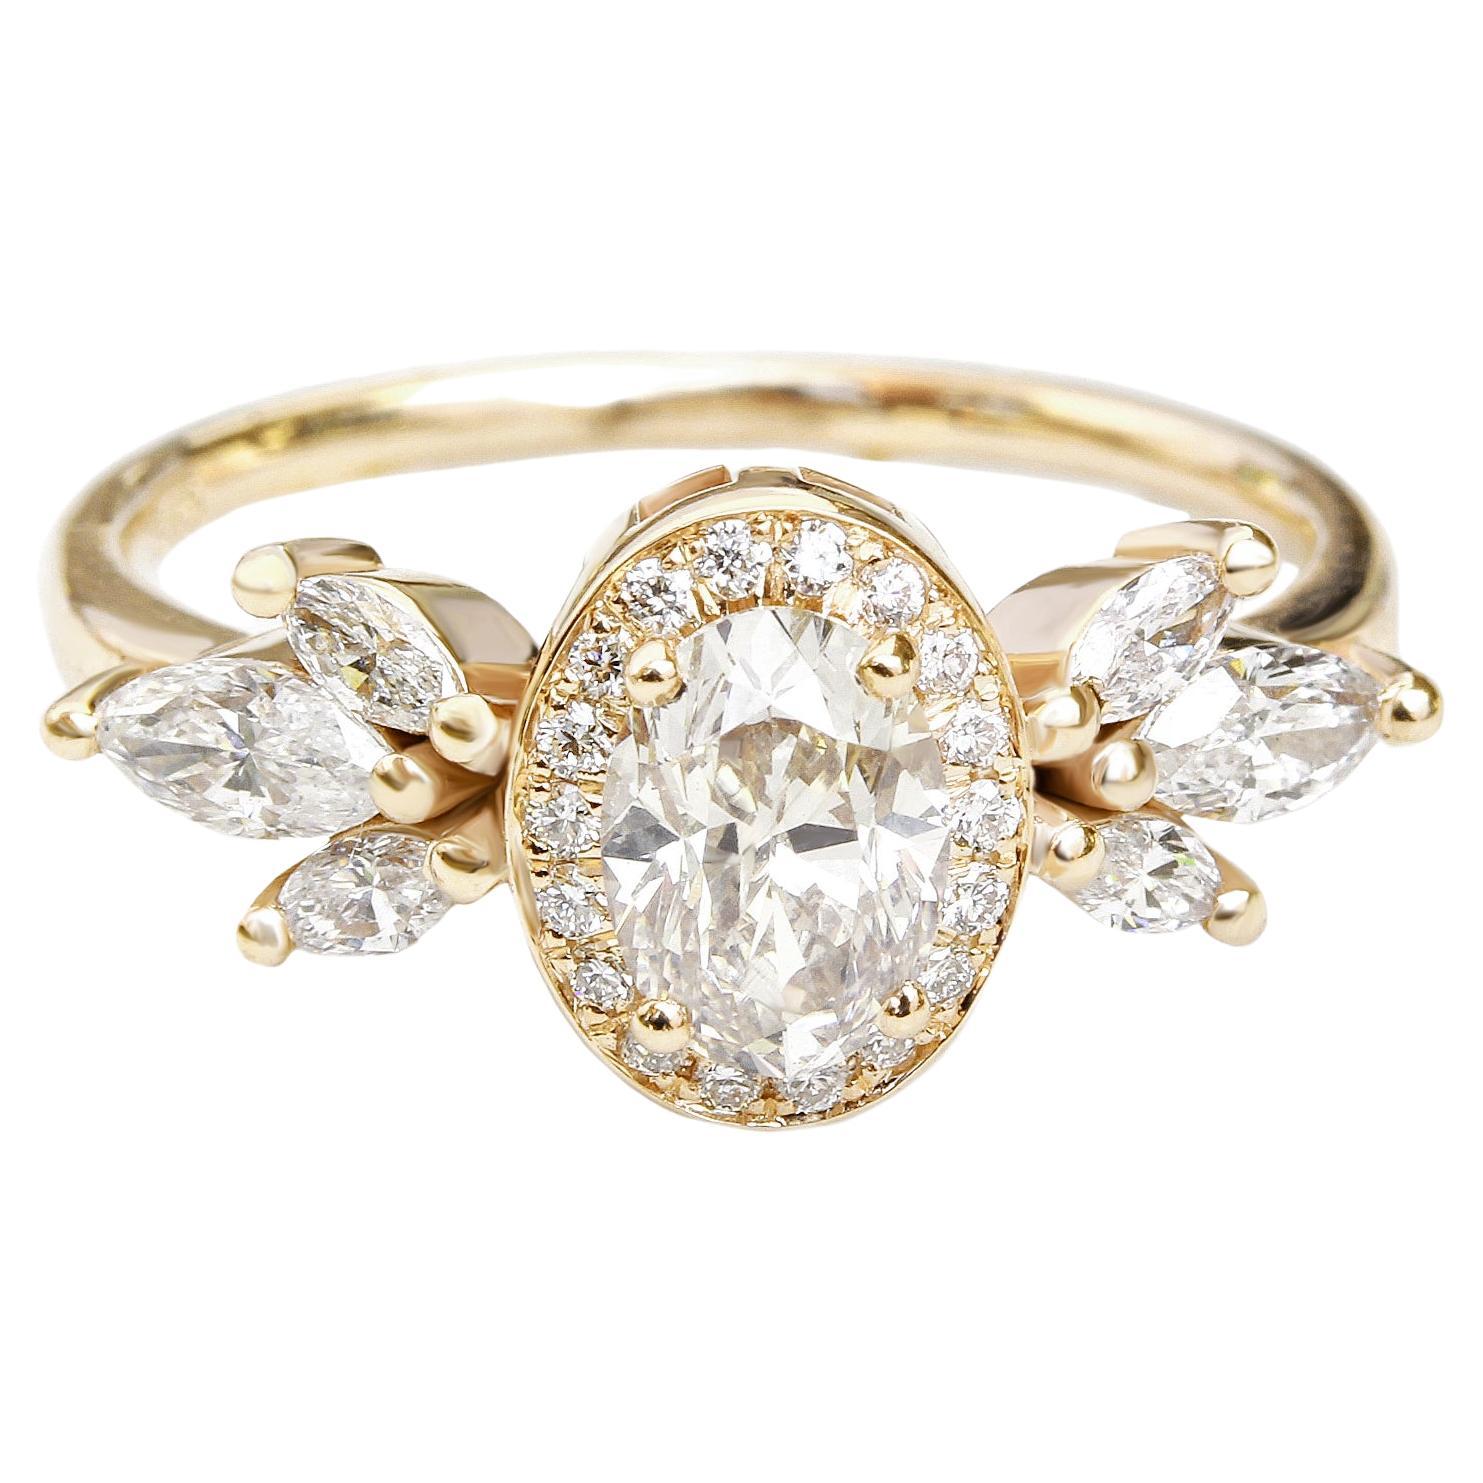 Beautiful & delicate Oval Moissanite diamond halo unique engagement ring - 